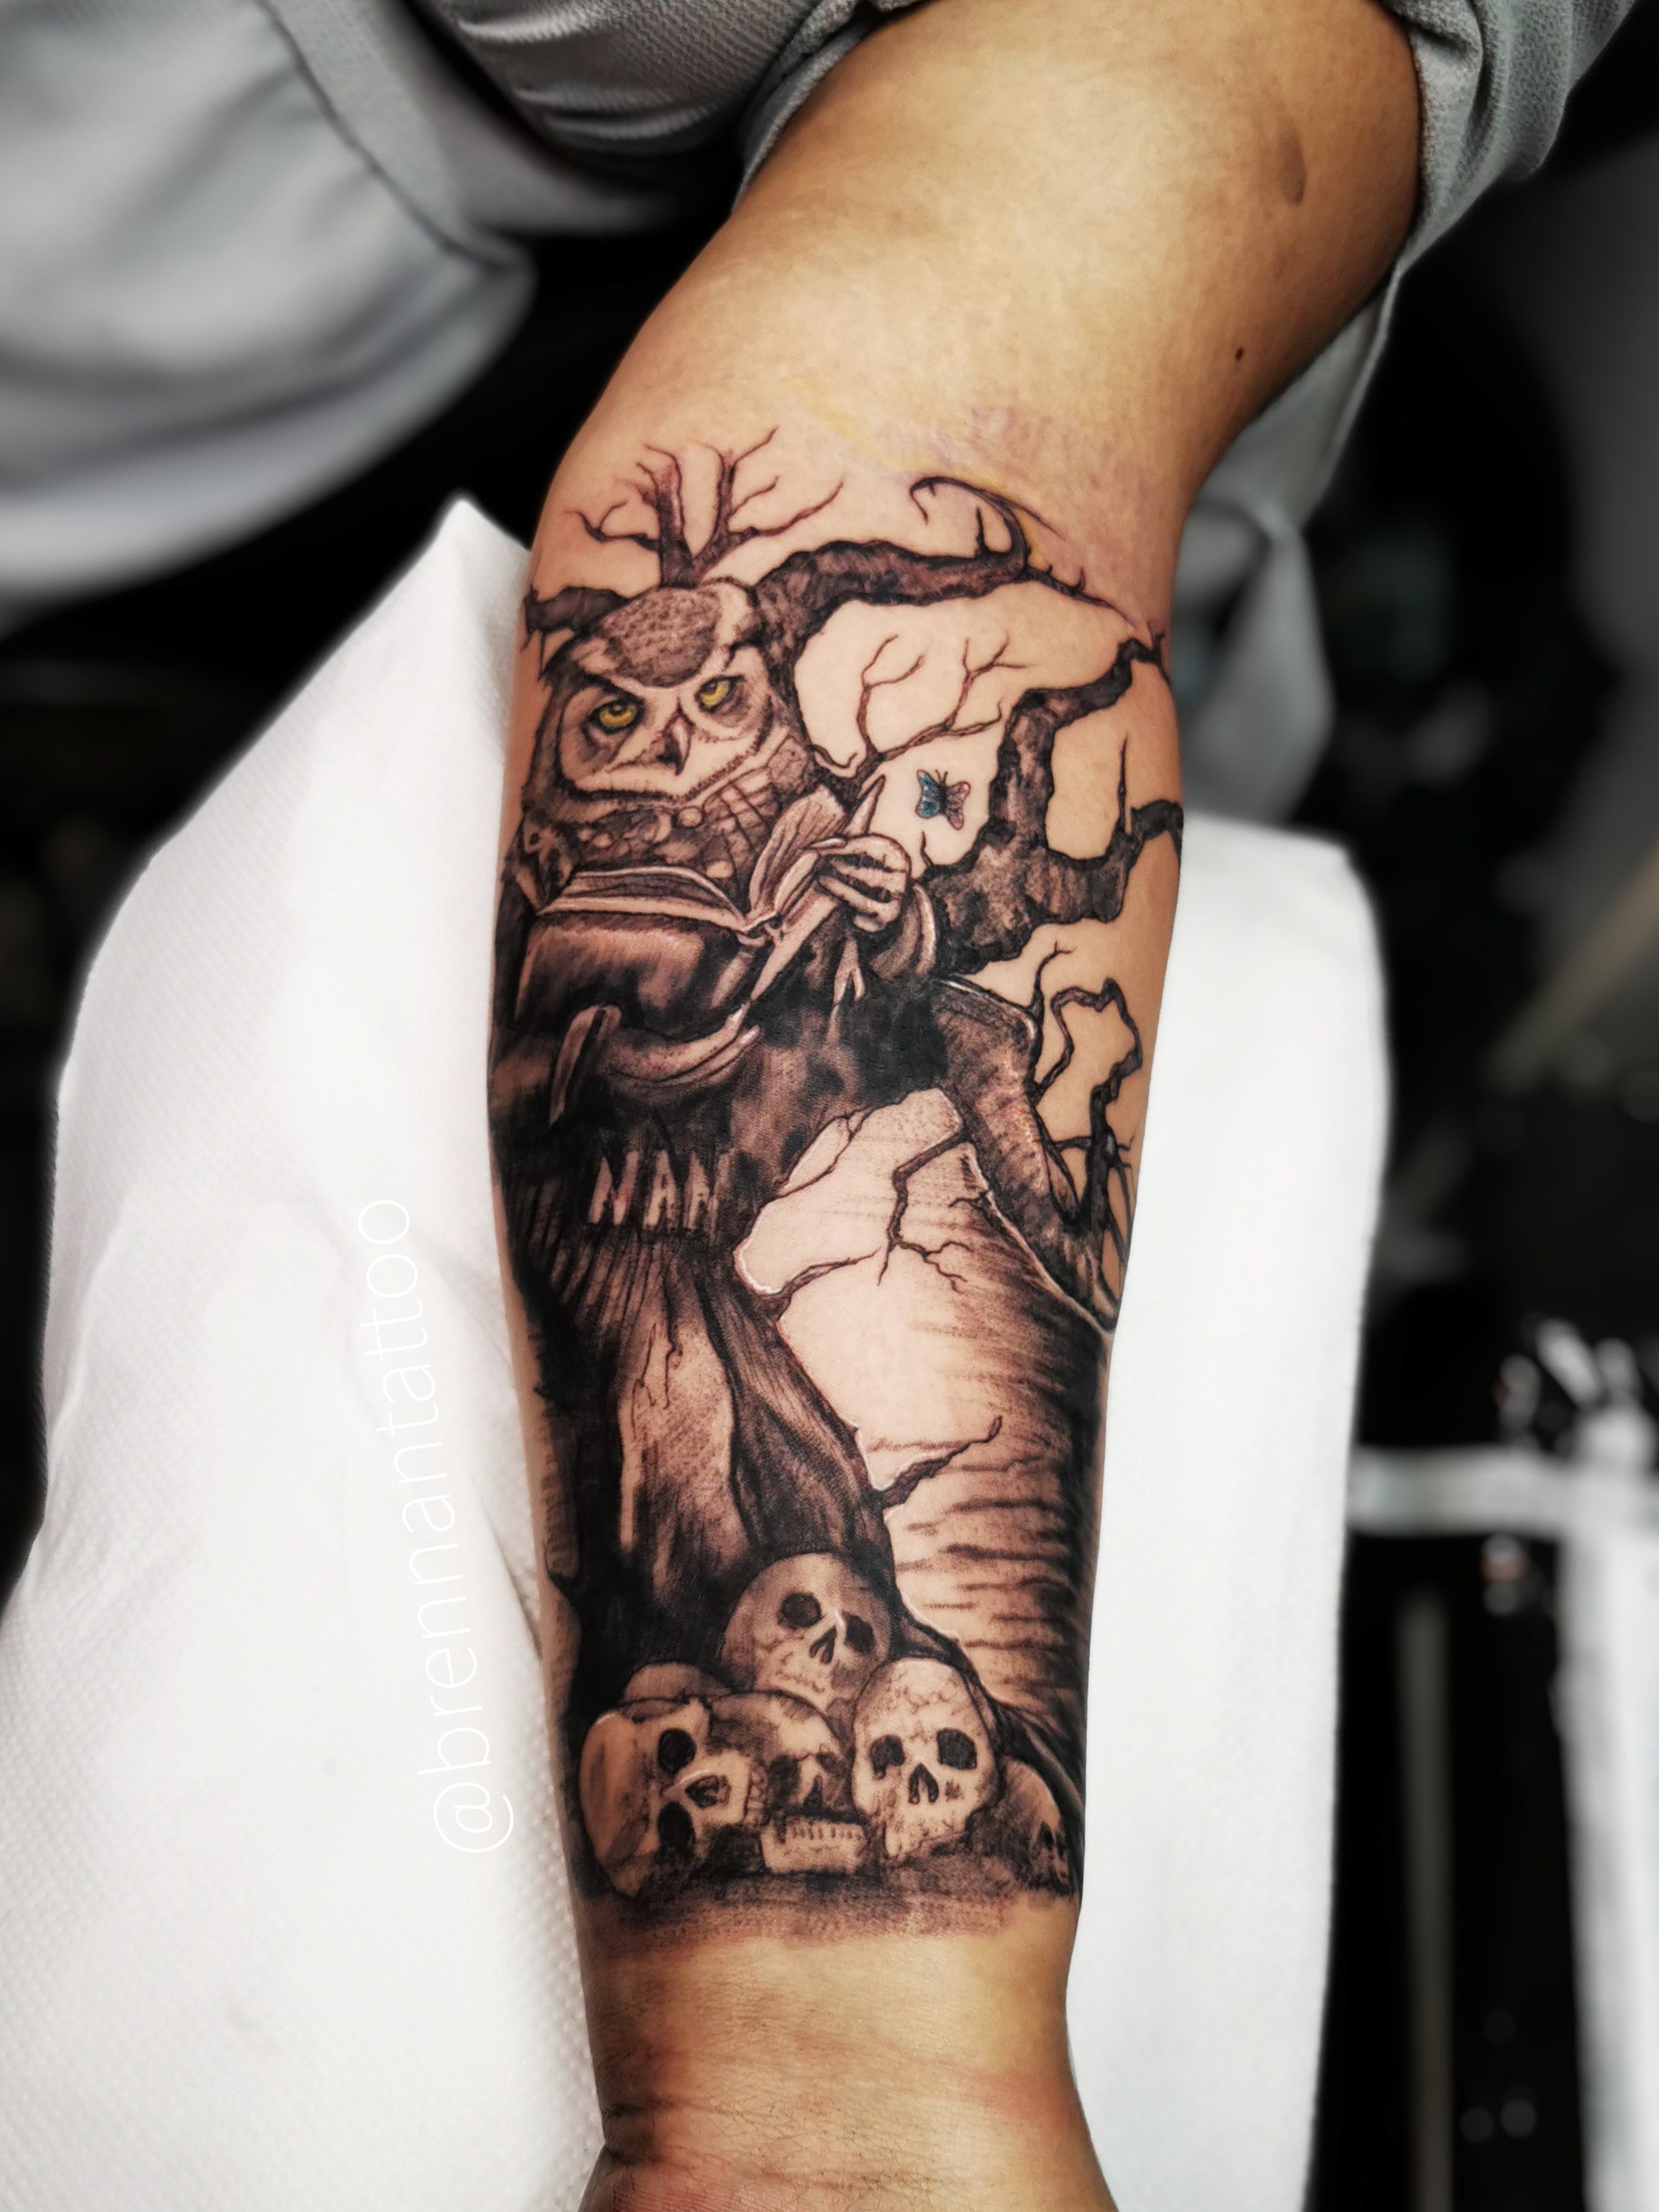 Ravan tattoo #ravantattoo | Tattoos, Polynesian tattoo, Polynesian